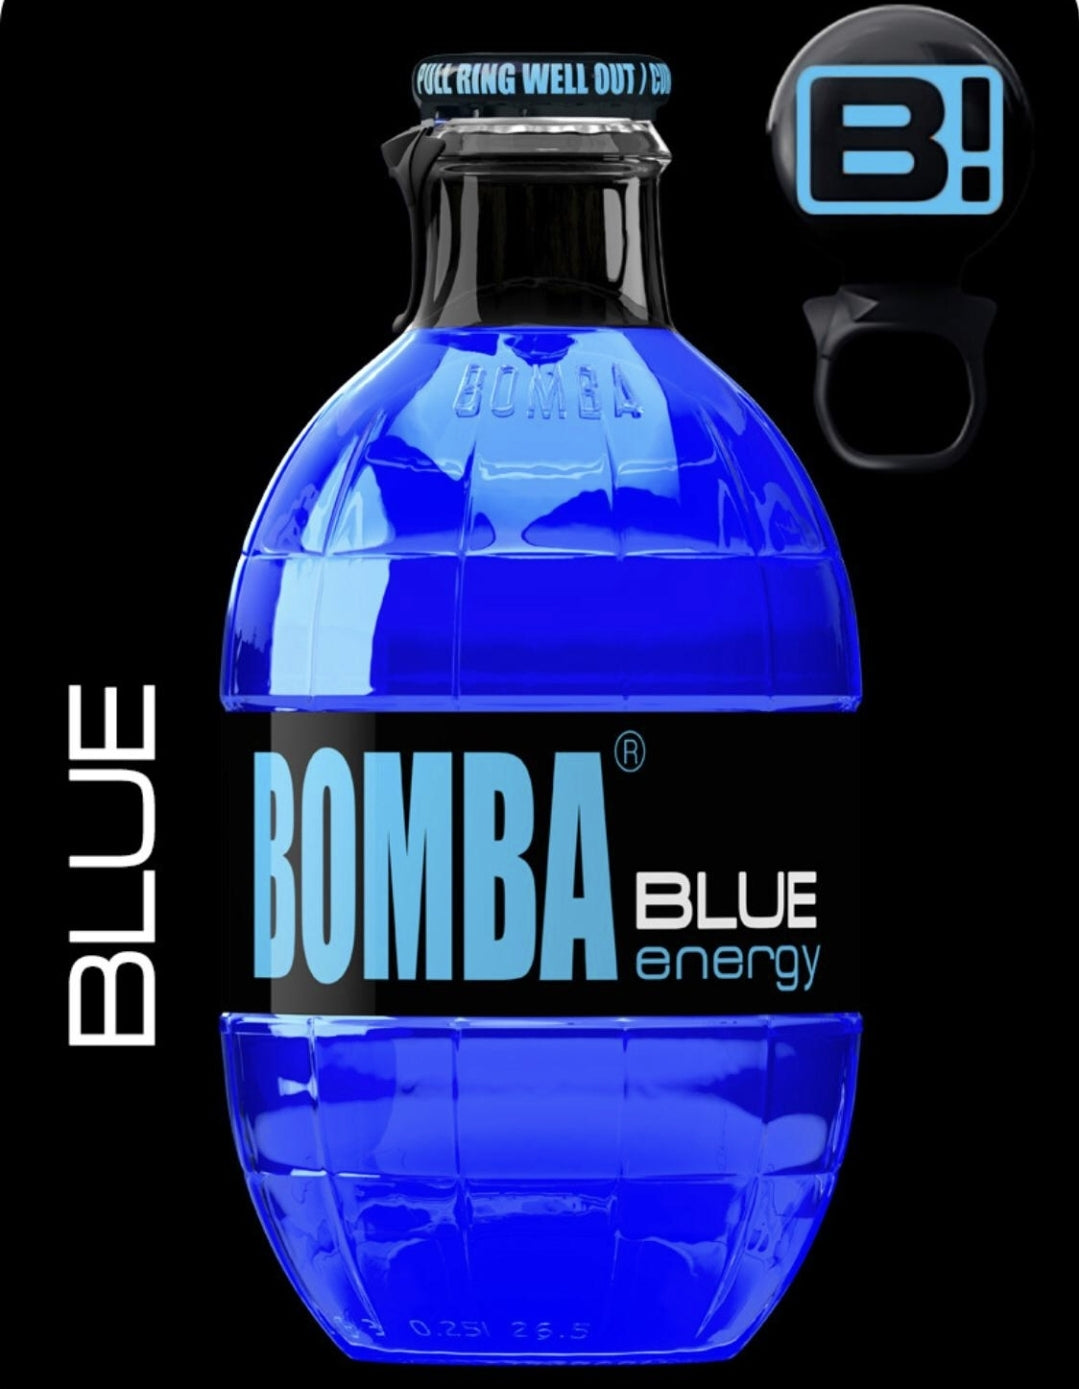 Bomba Blue Energy drankje